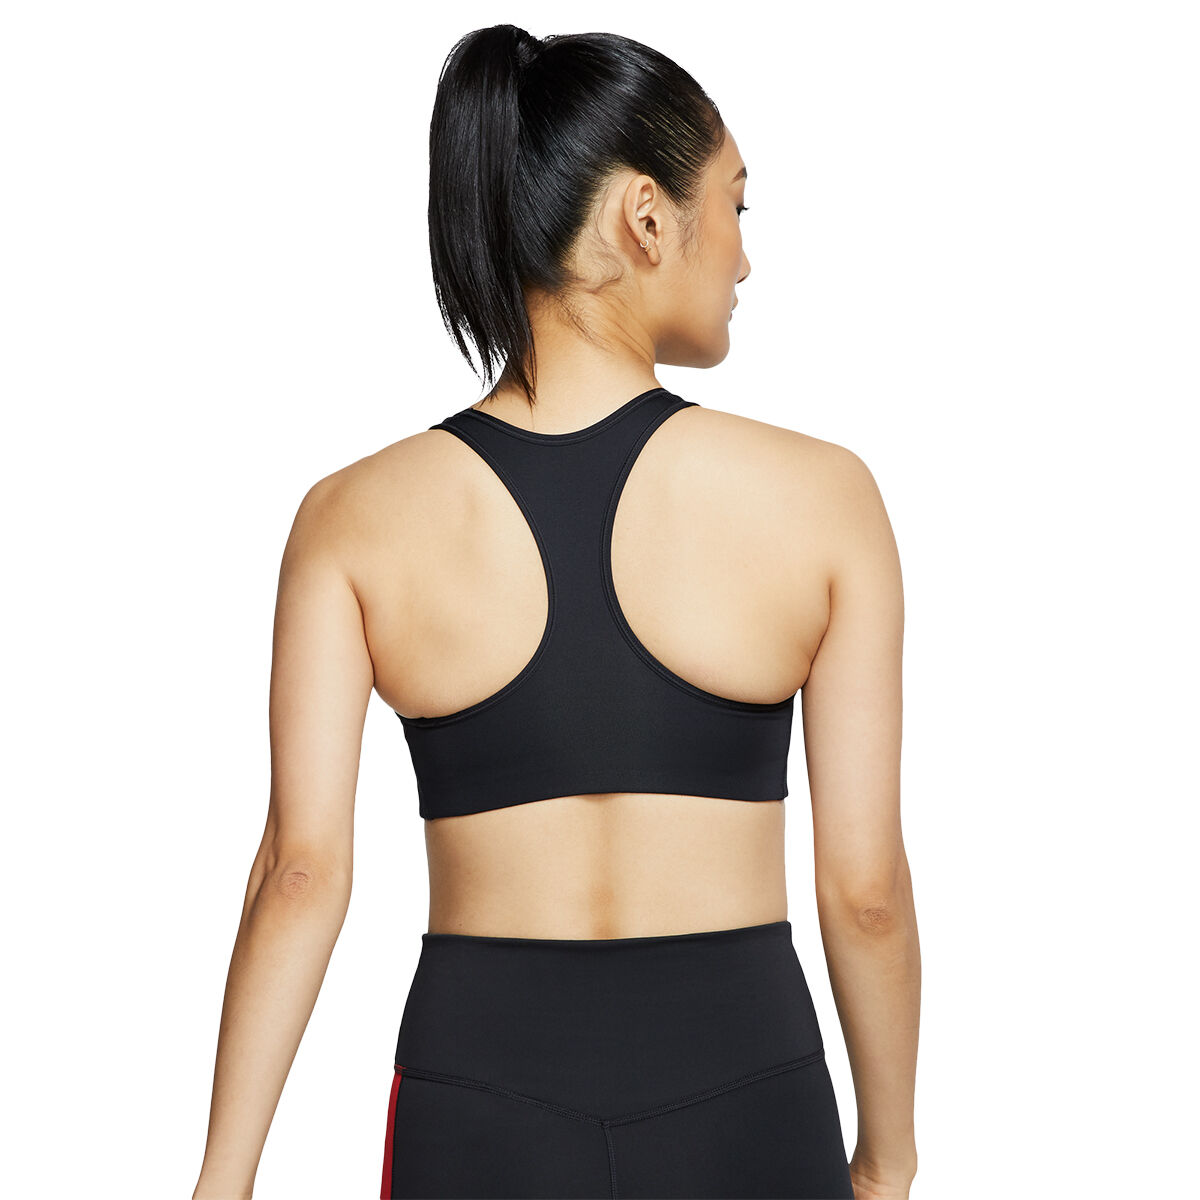 Nike Training swoosh medium support sports bra in grey